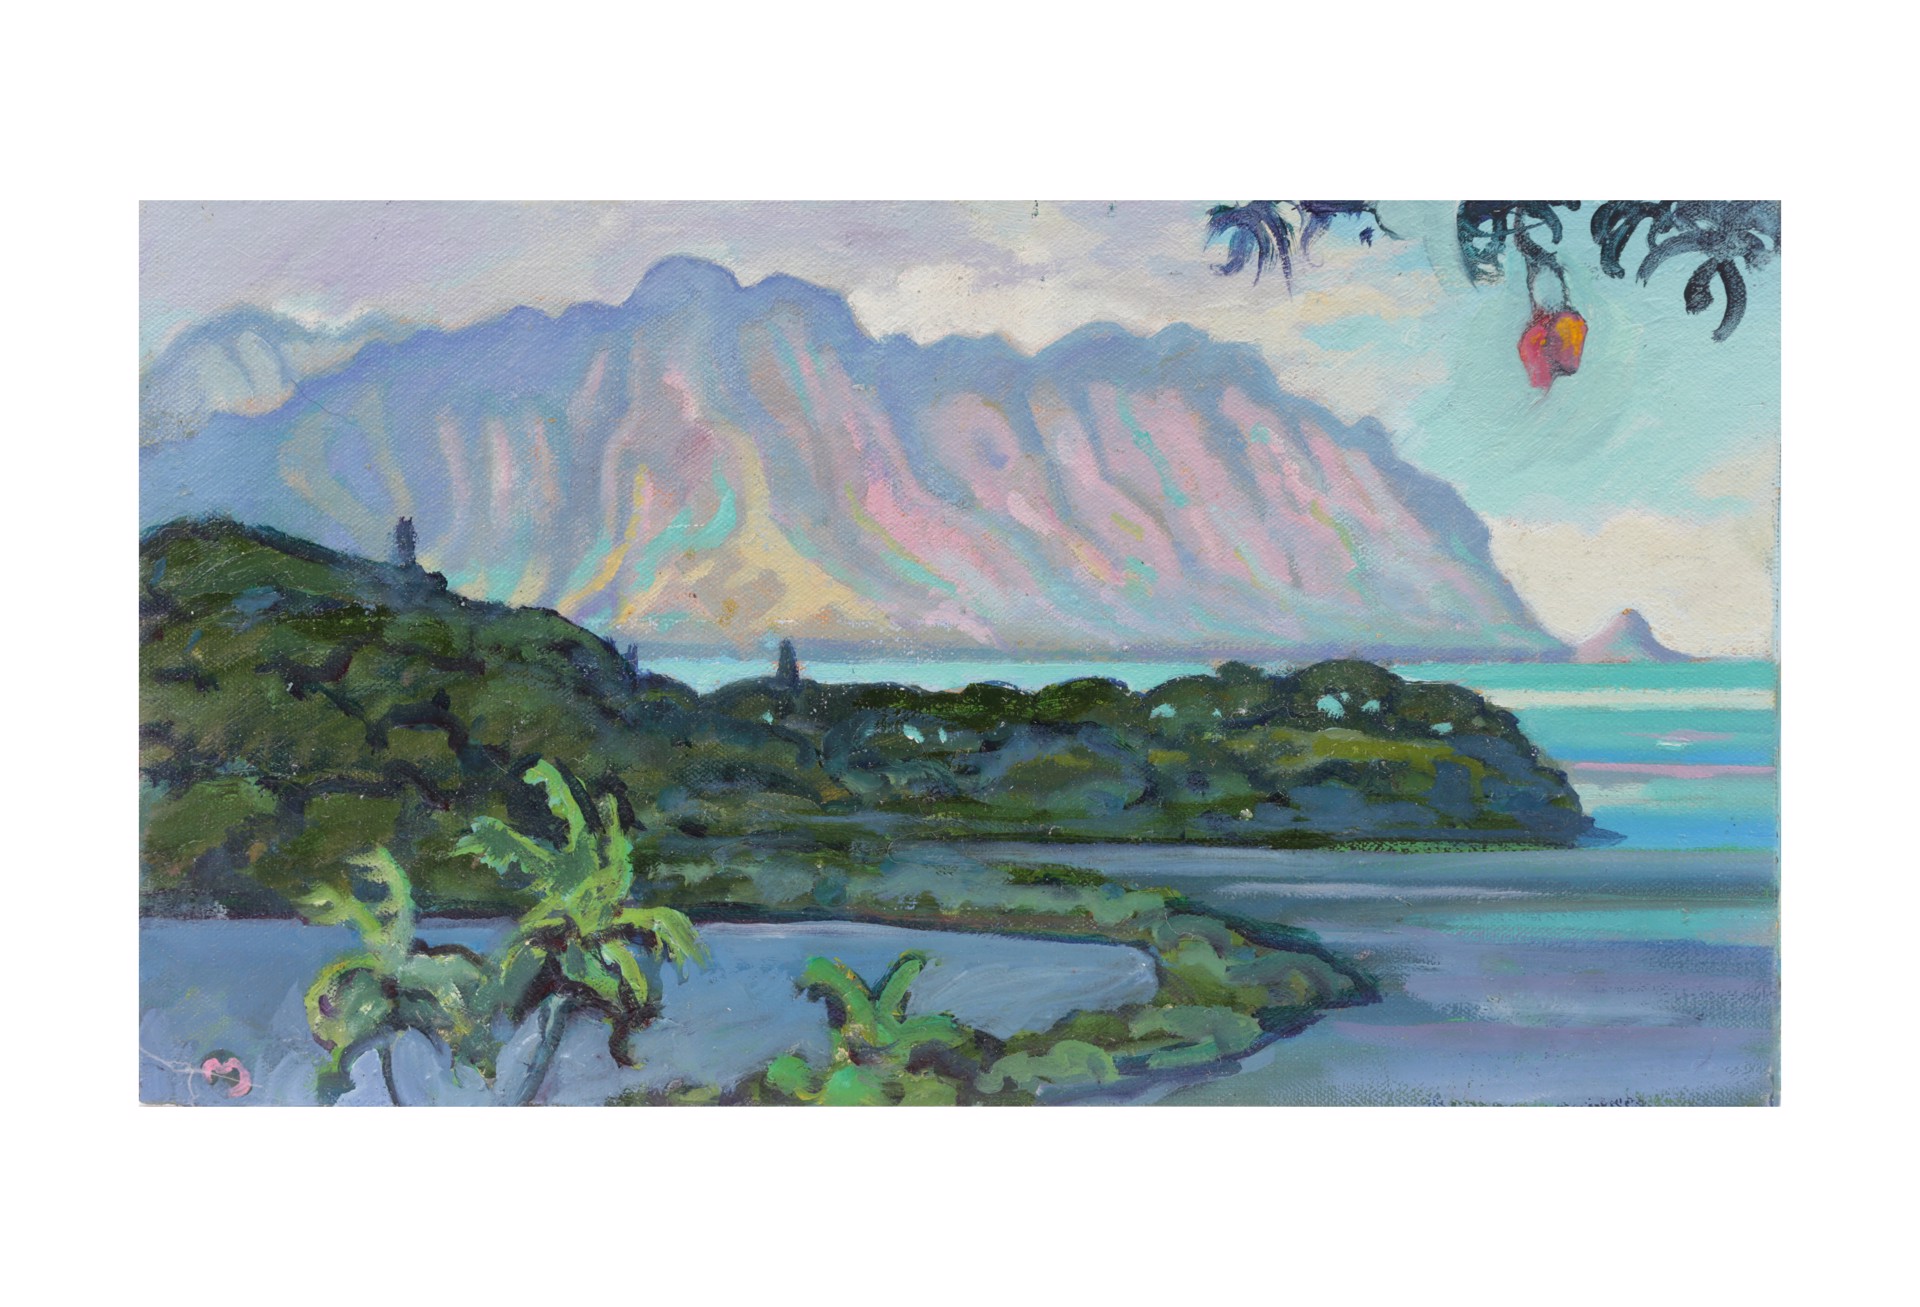 Backlight Kāneʻohe by Dennis Morton